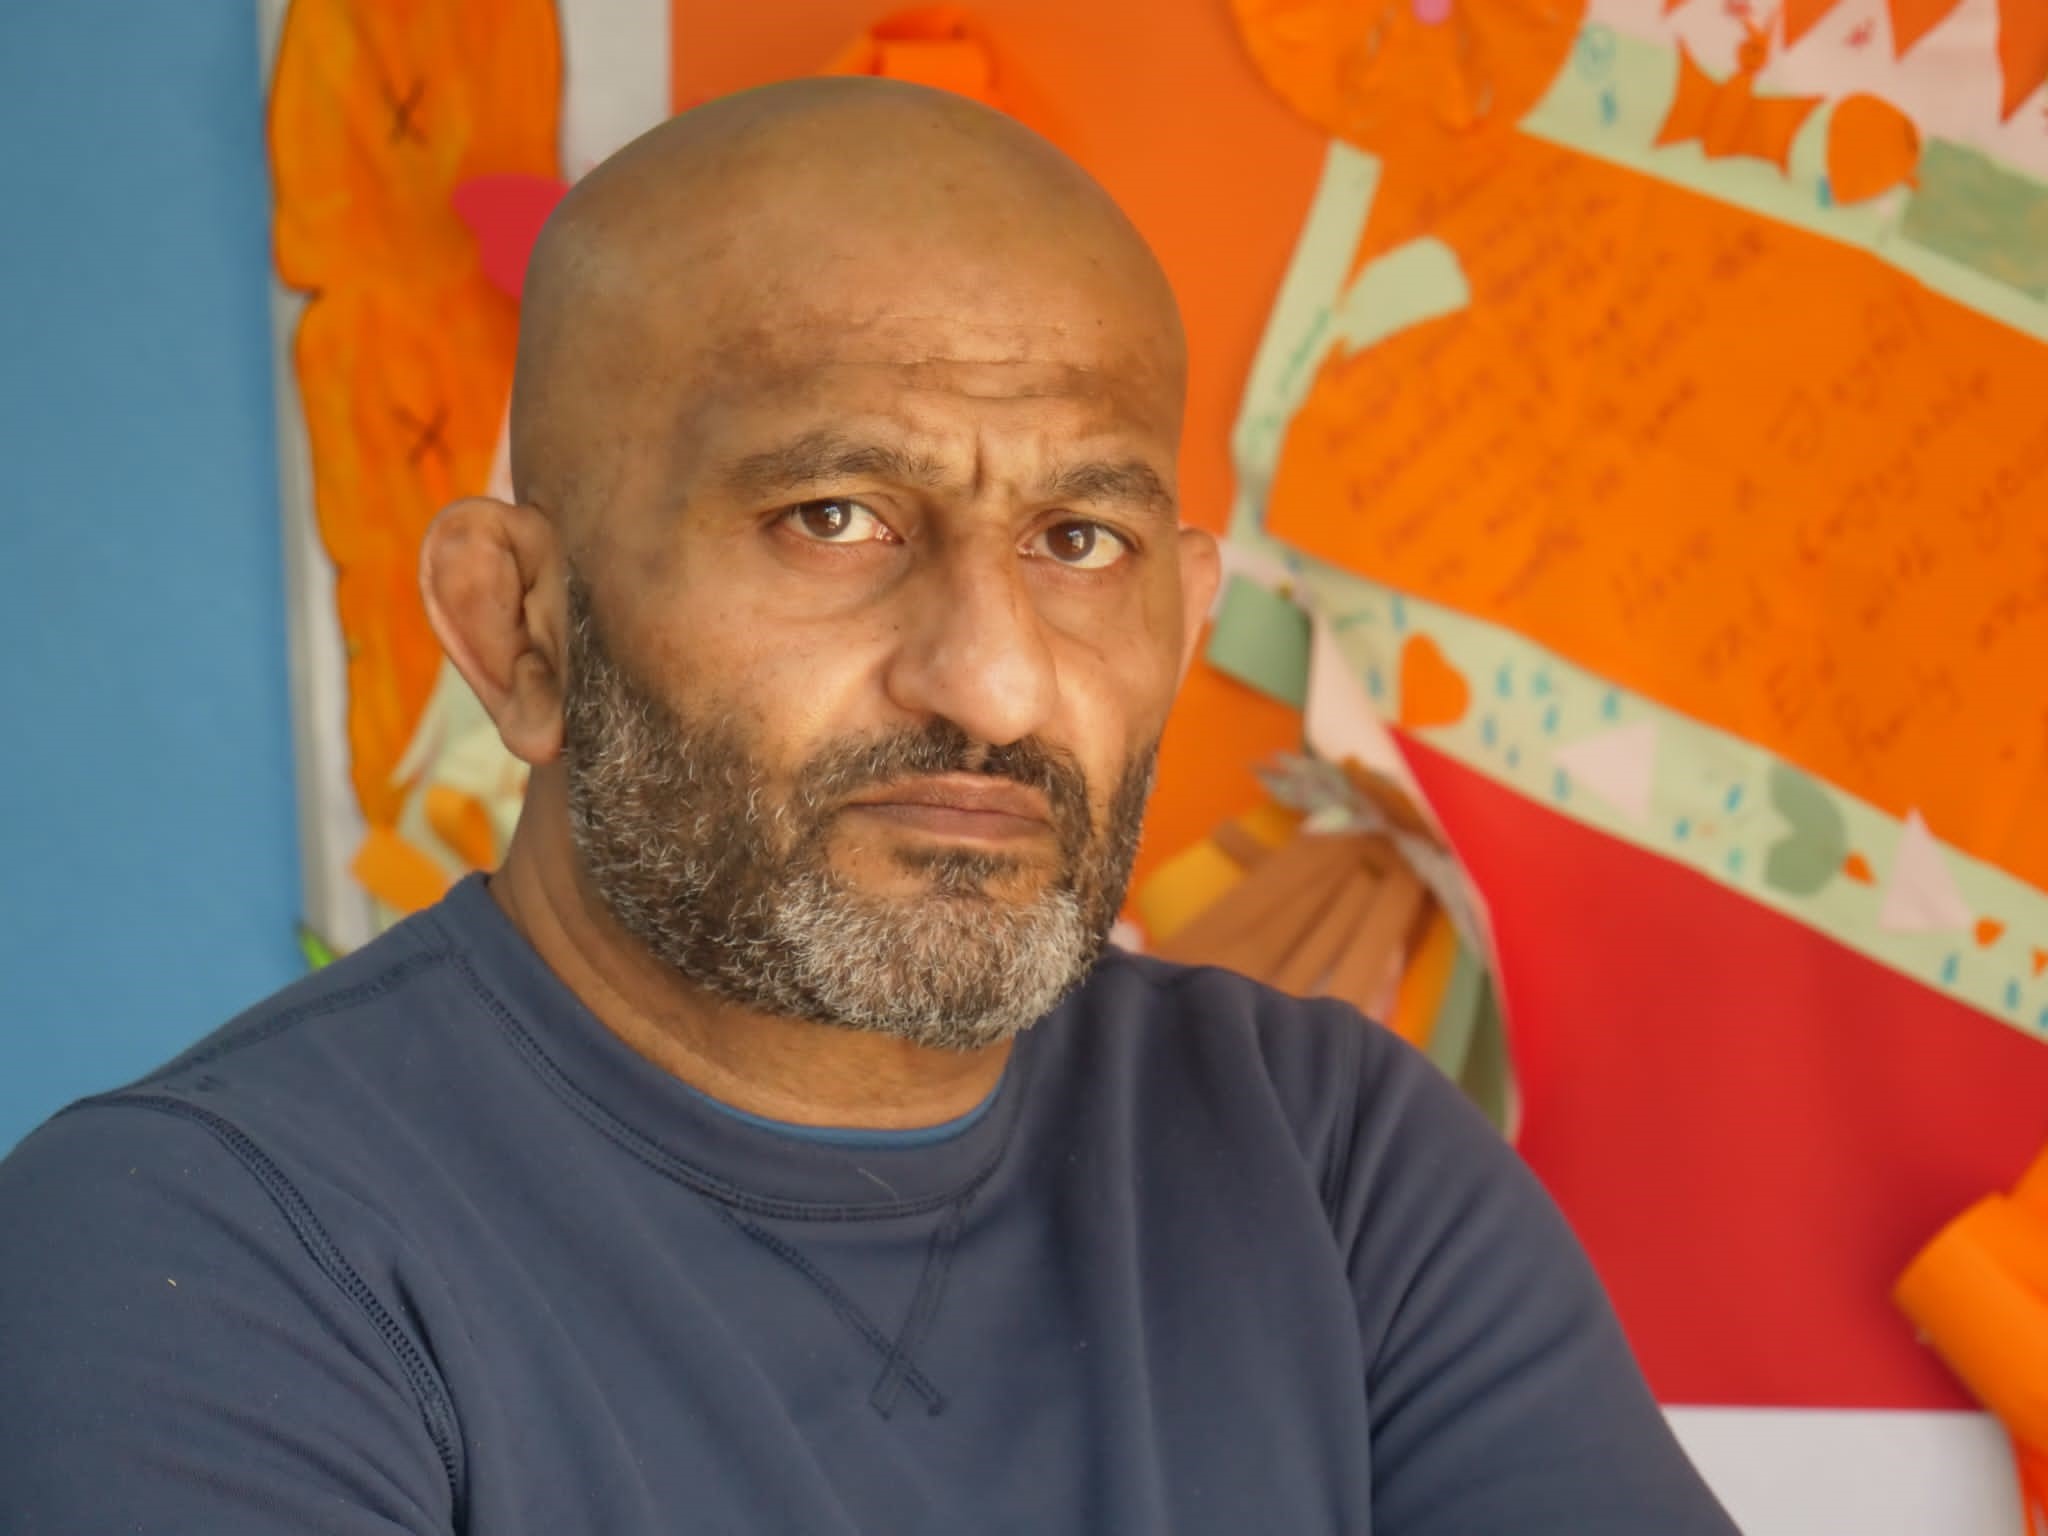 Portrait of Salman Mirza against a bright orange background